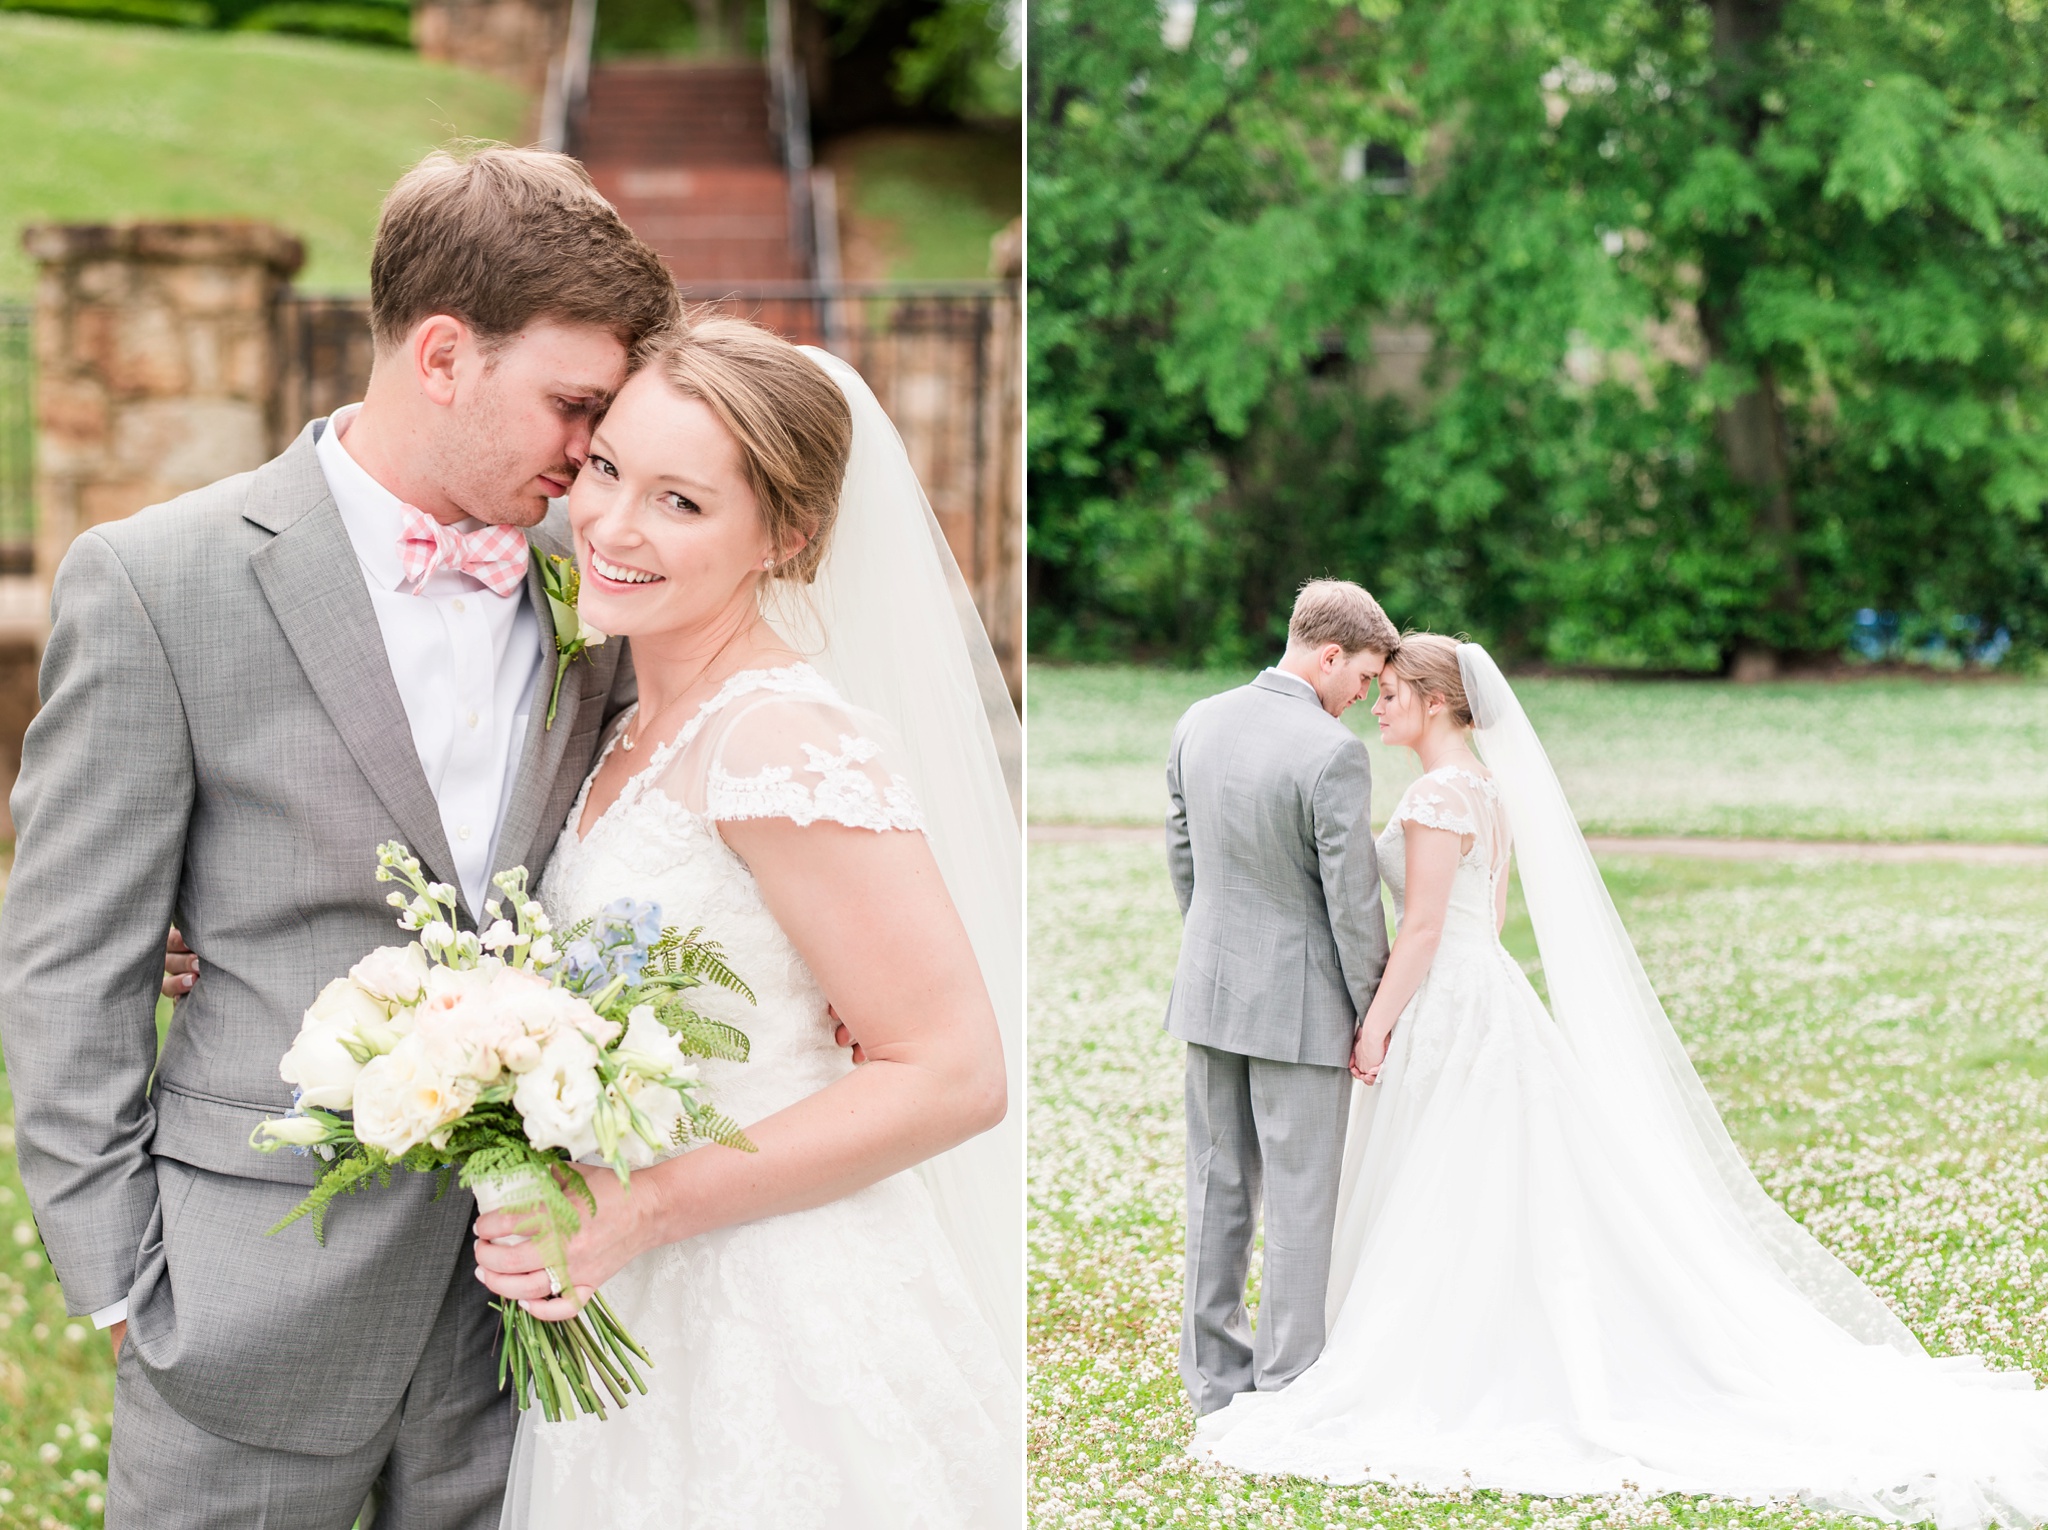 Briarwood Caroline House Blush Spring Garden Wedding | Birmingham Alabama Wedding Photographers_0053.jpg